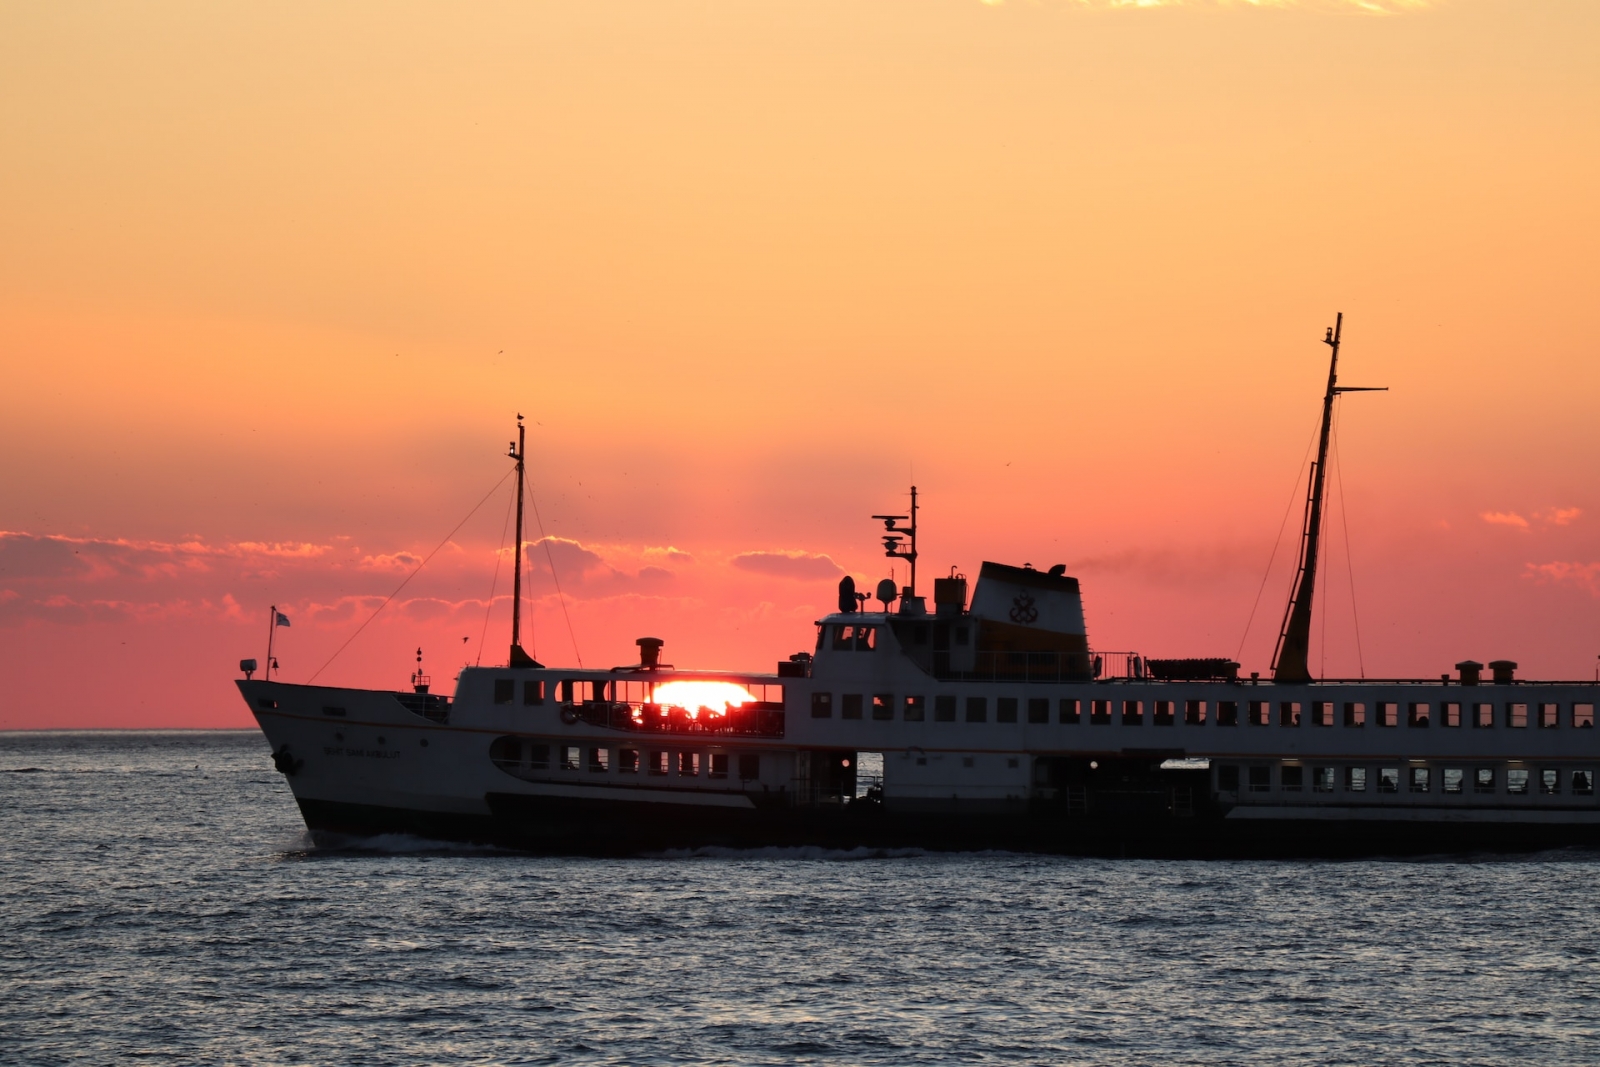 The locals call it "Sunrise Ferry"...